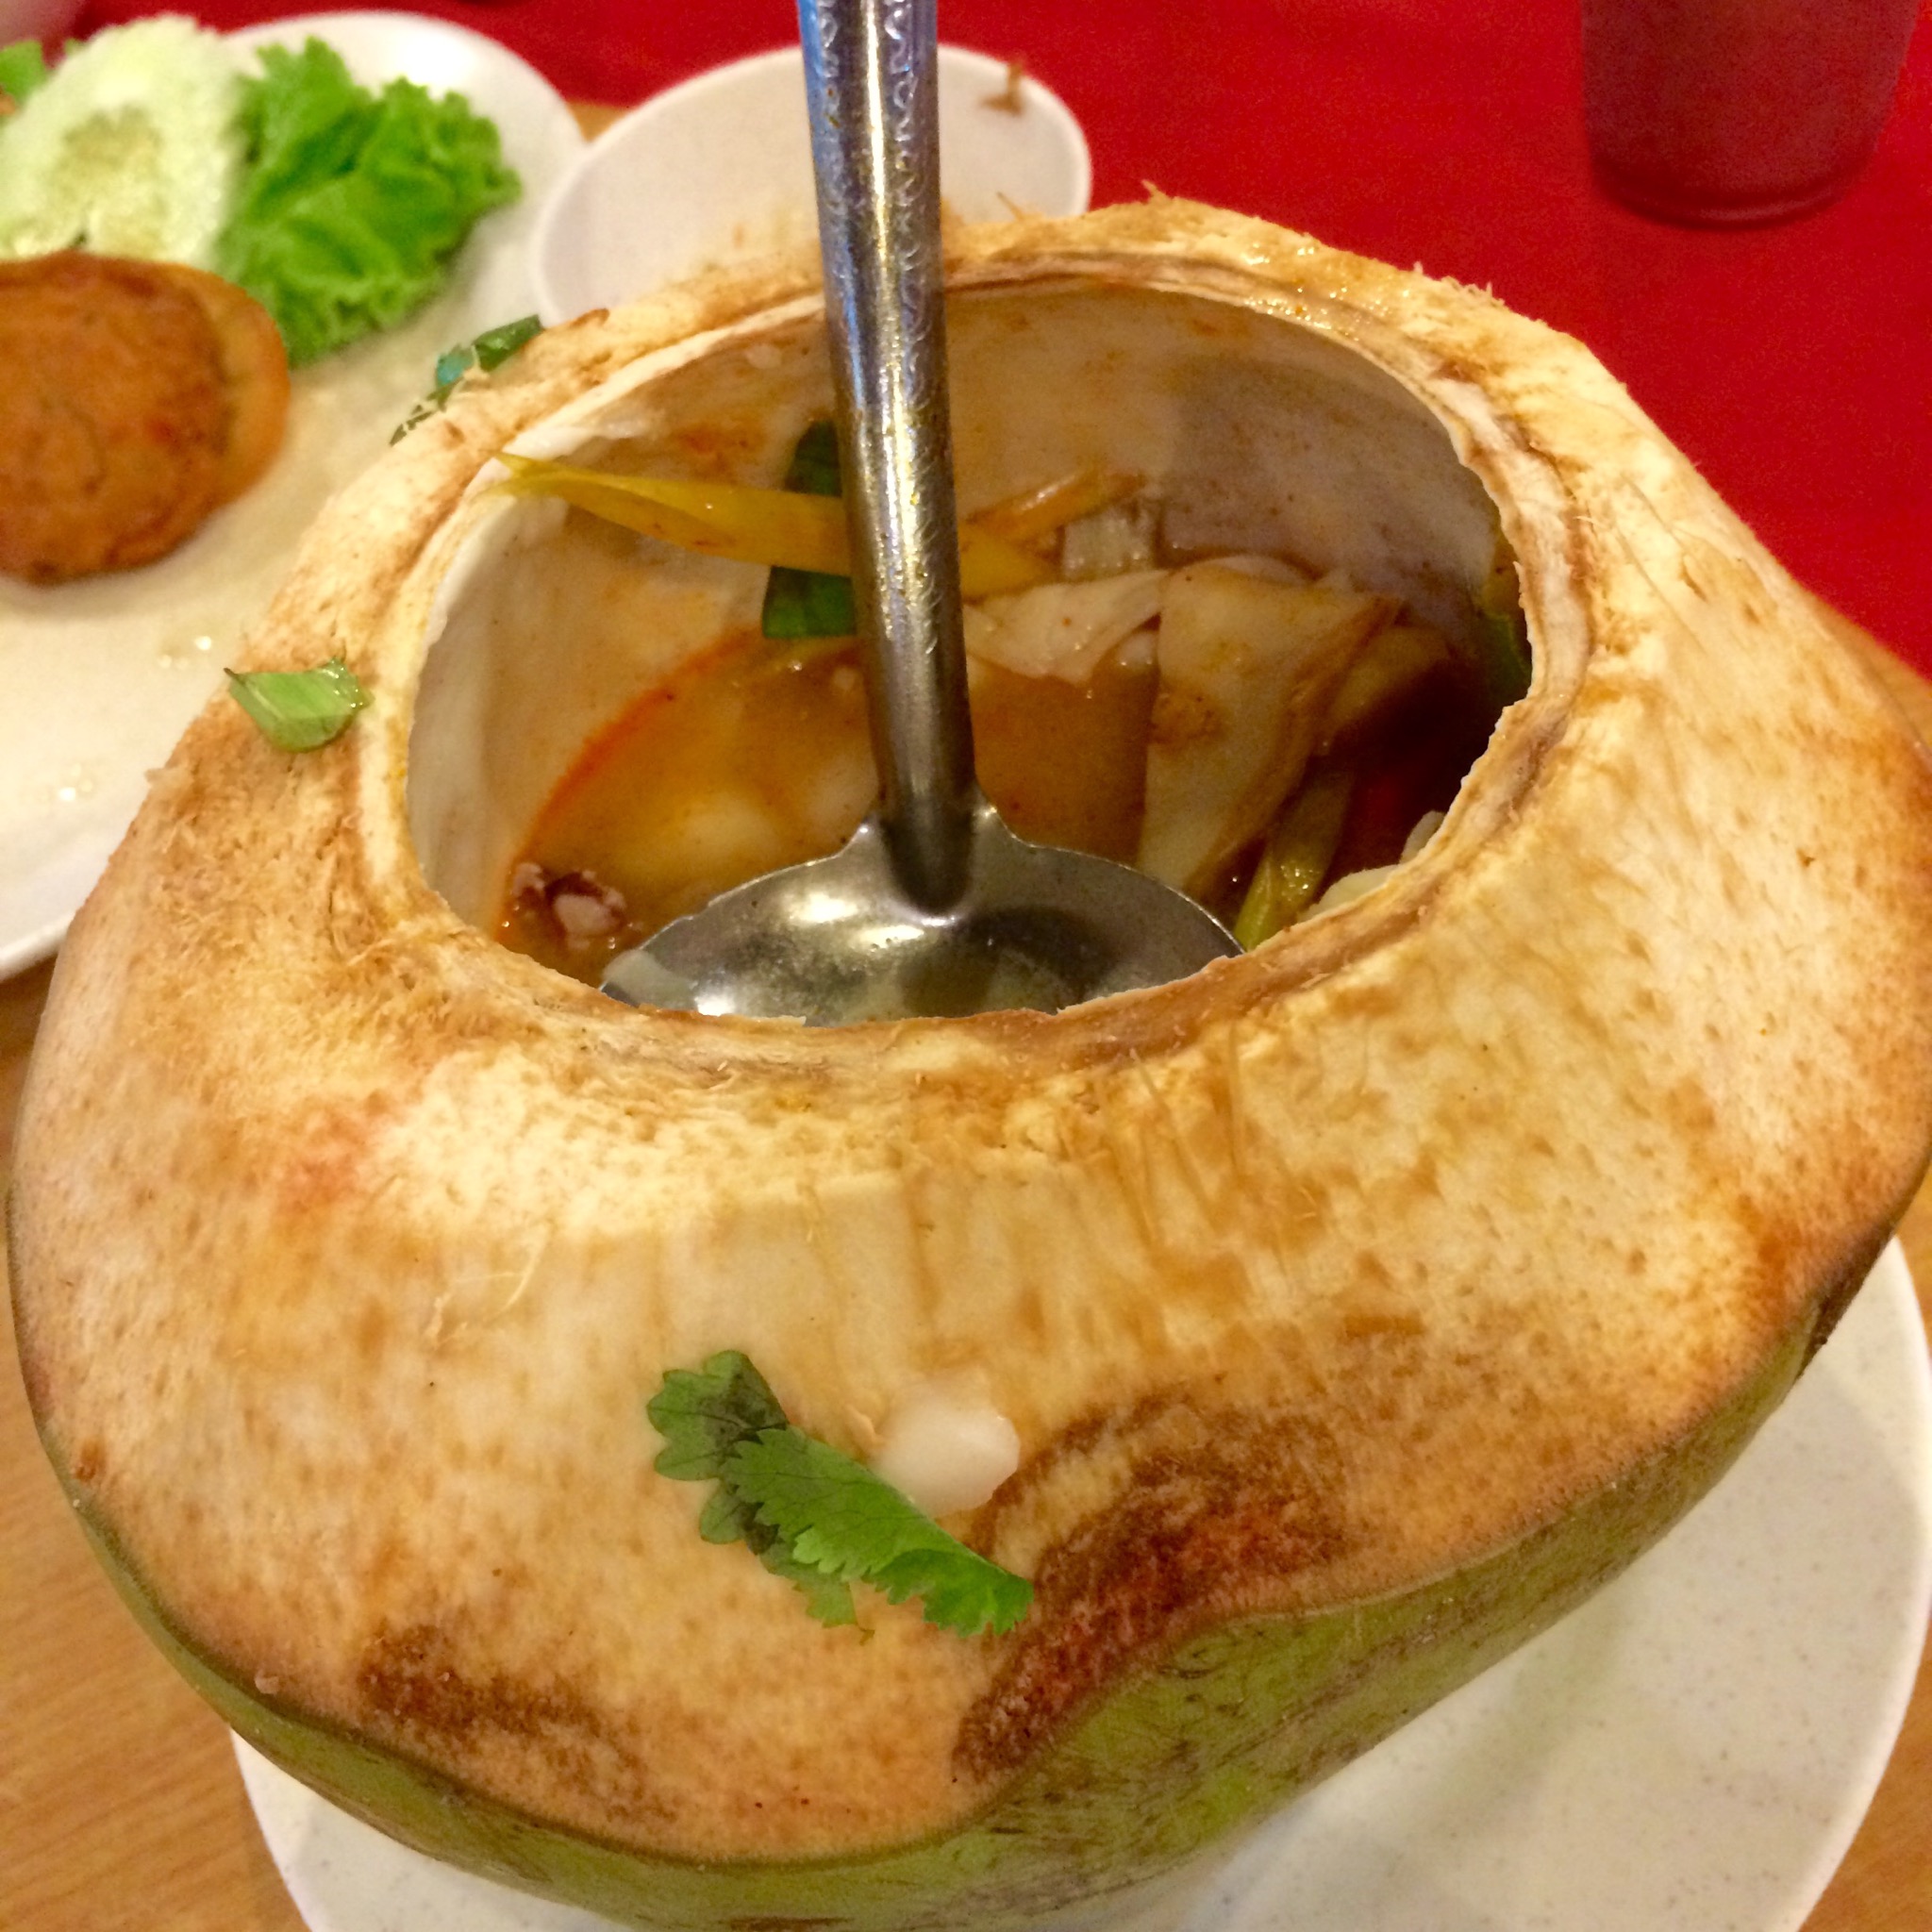 Thai street food taman maluri